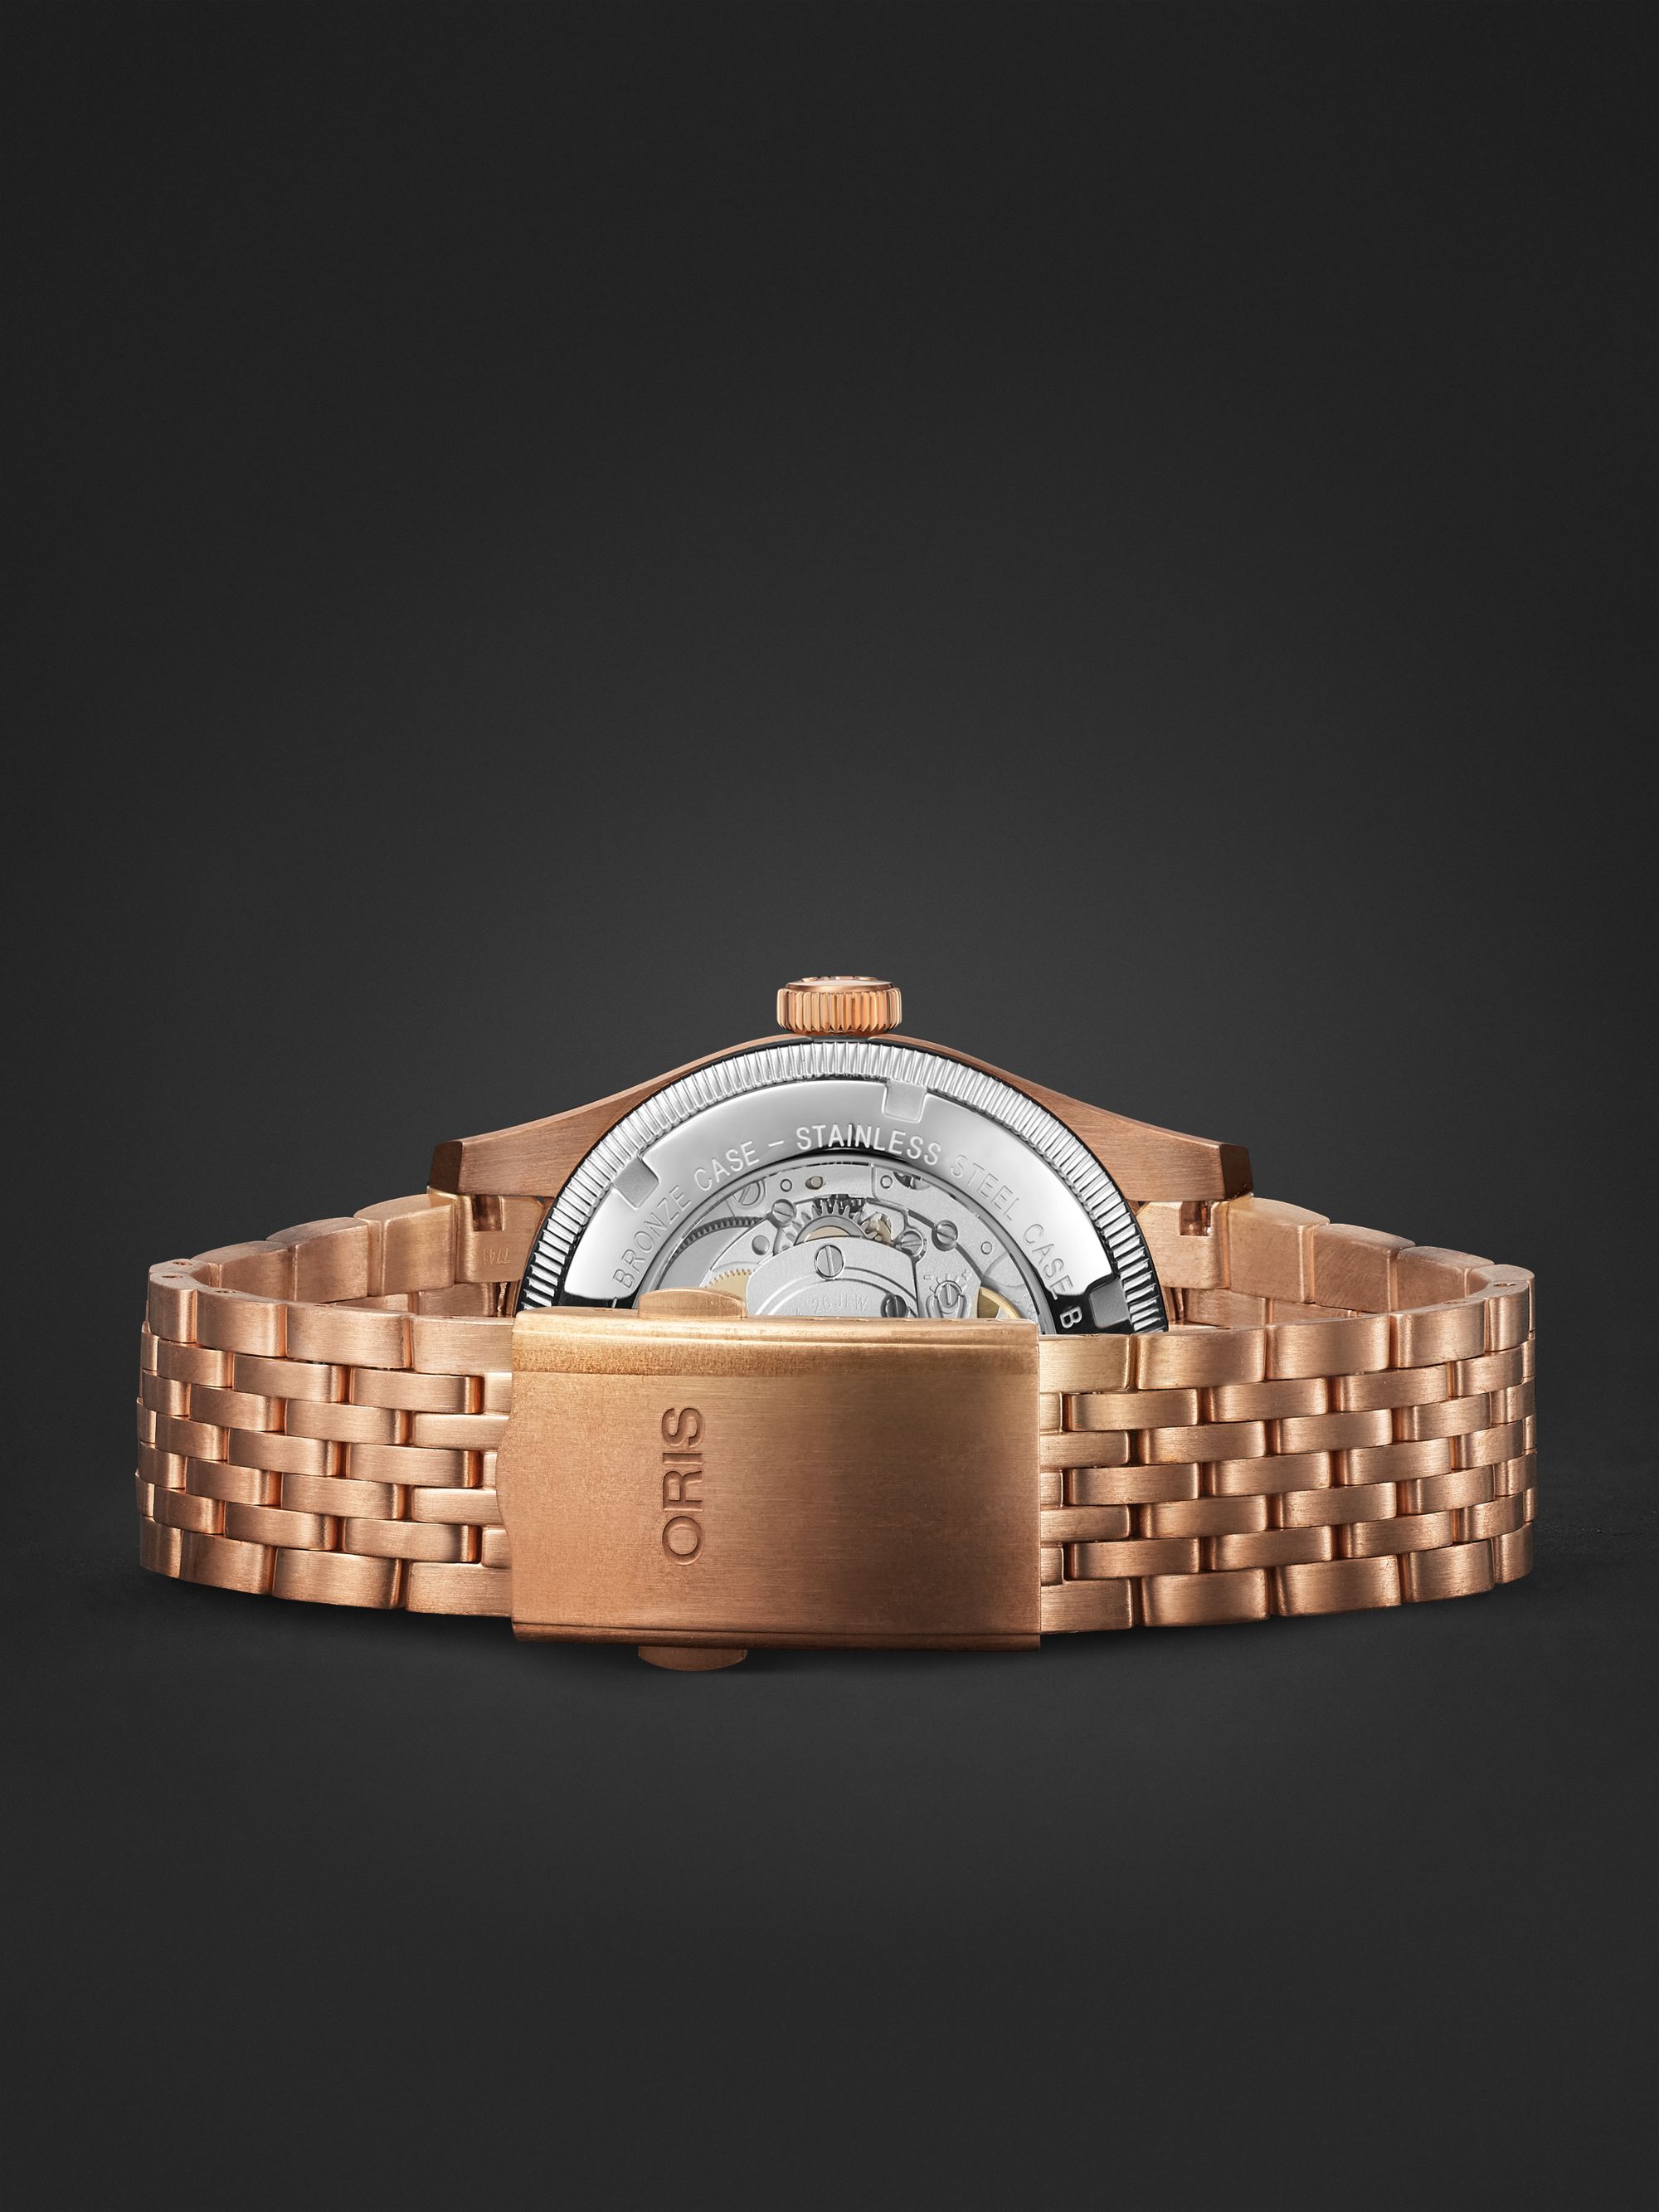 ORIS Big Crown Pointer Date Automatic 40mm Bronze Watch, Ref. No. 01 754 7741 3165-07 8 20 01